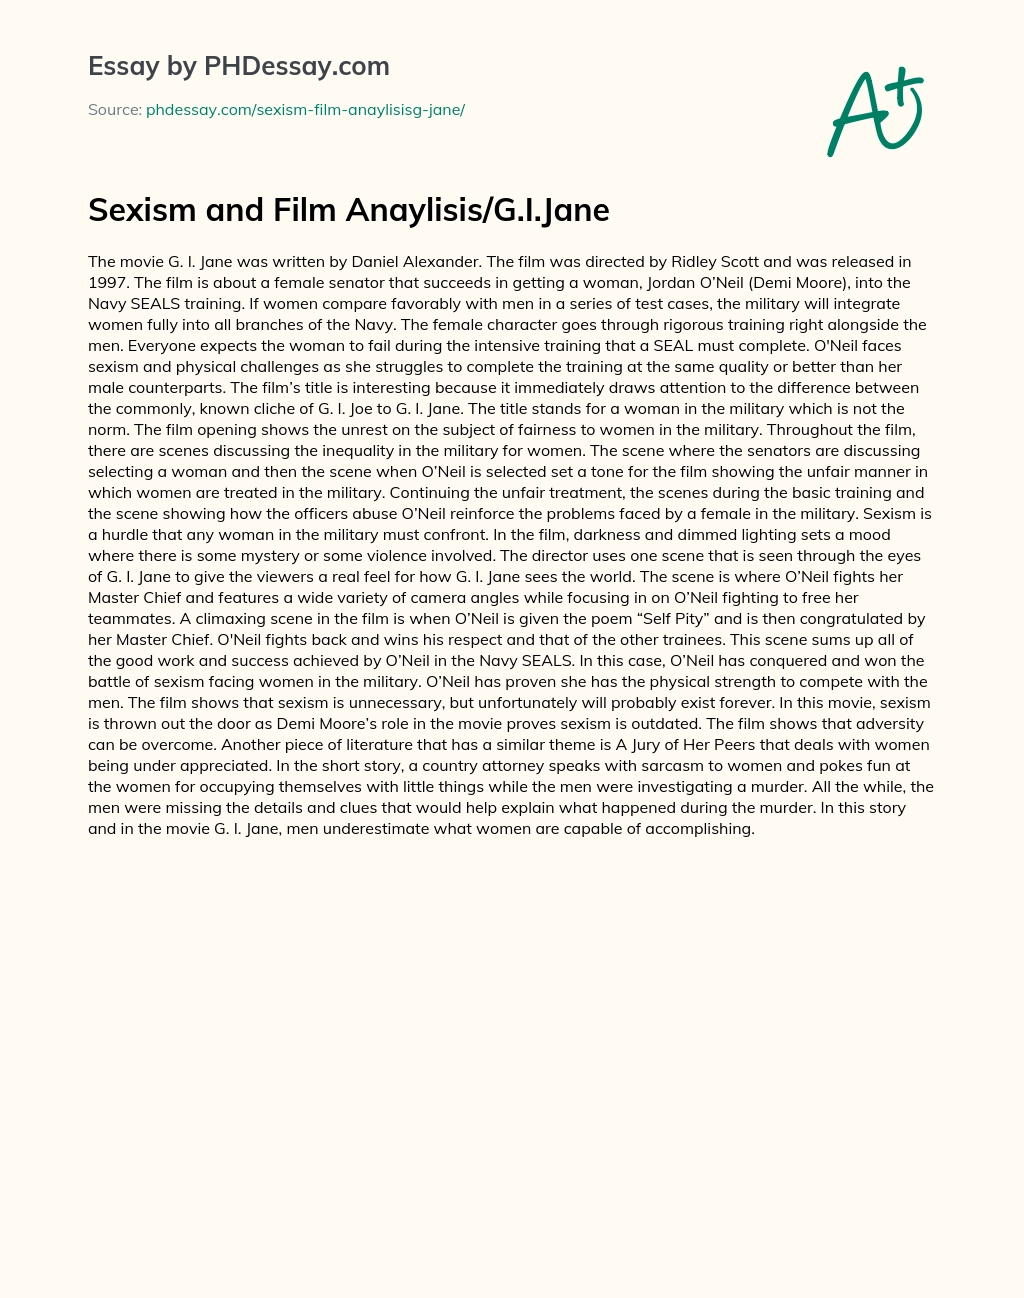 Sexism and Film Anaylisis/G.I.Jane essay